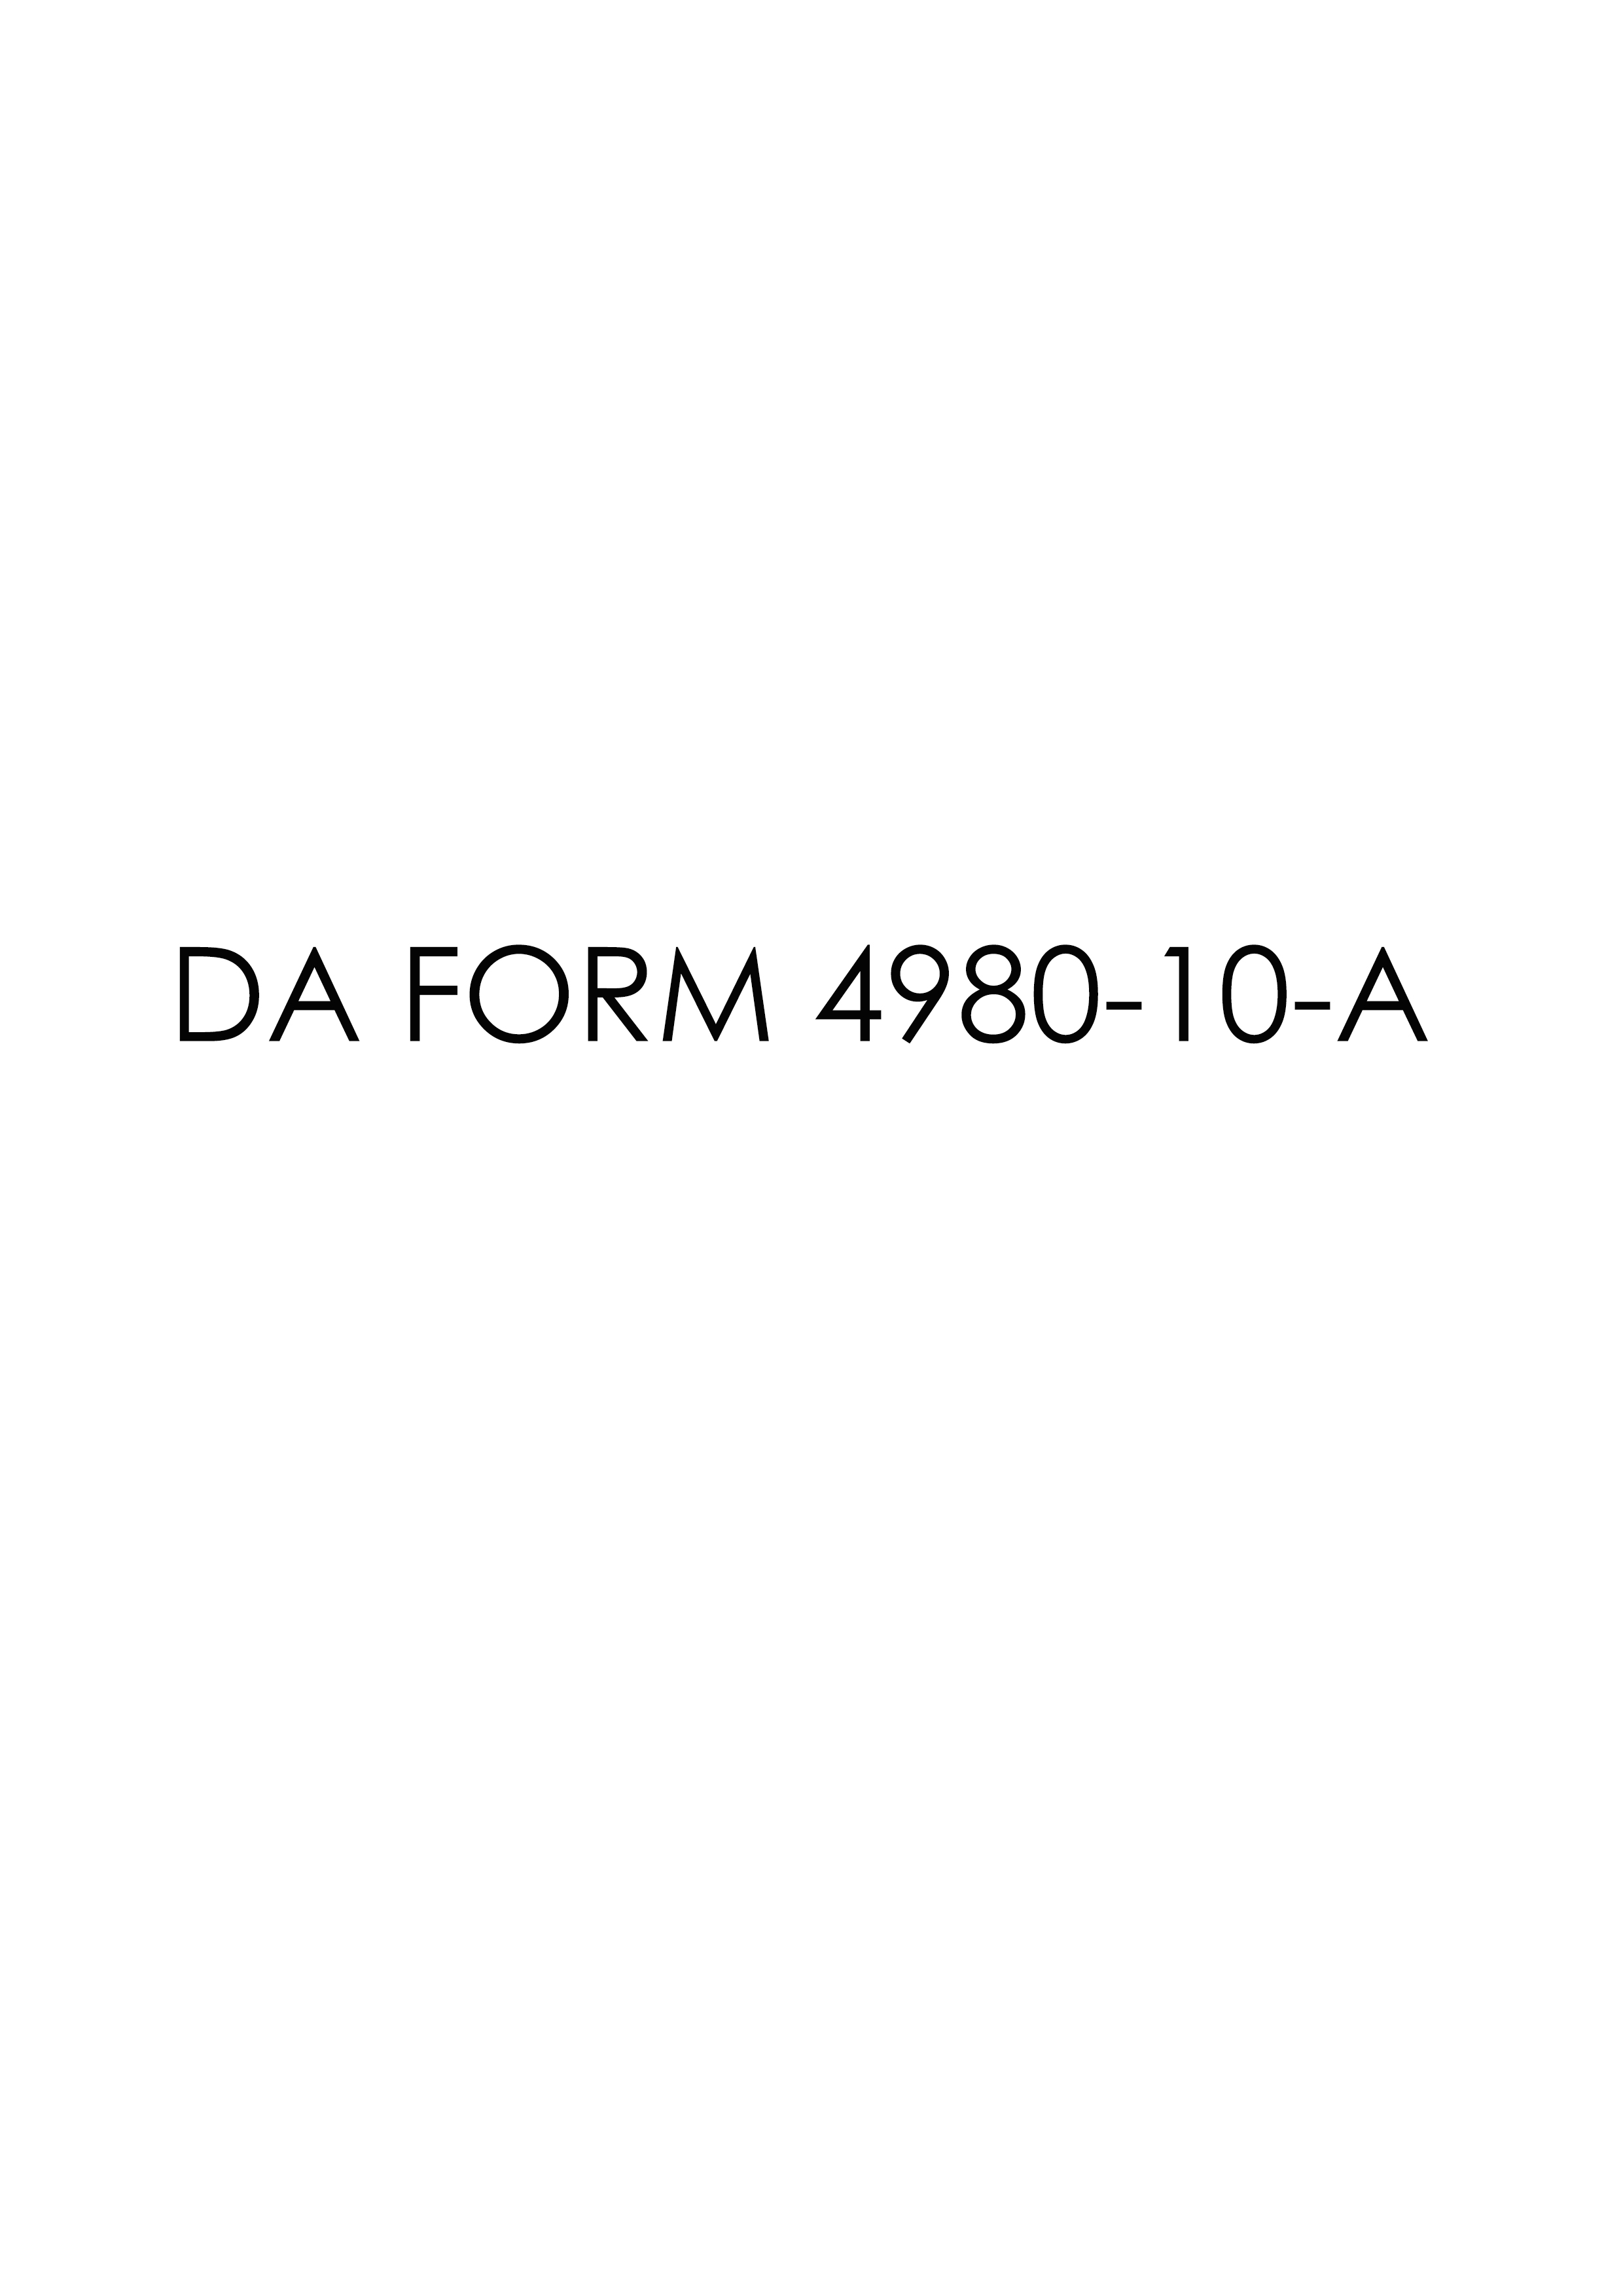 Download Fillable da Form 4980-10-A